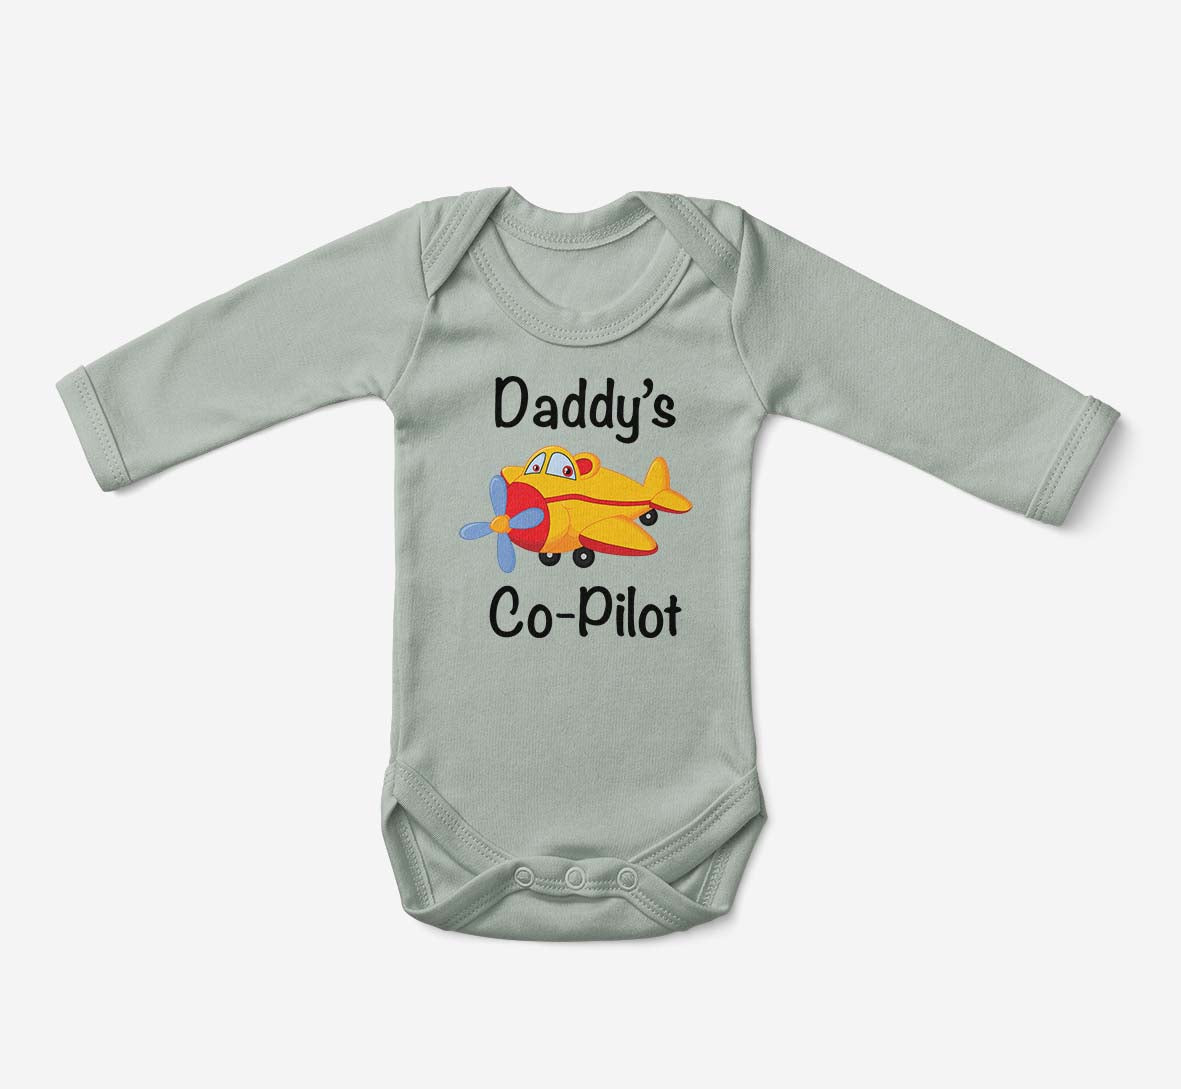 Daddy's Co-Pilot (Propeller) Designed Baby Bodysuits